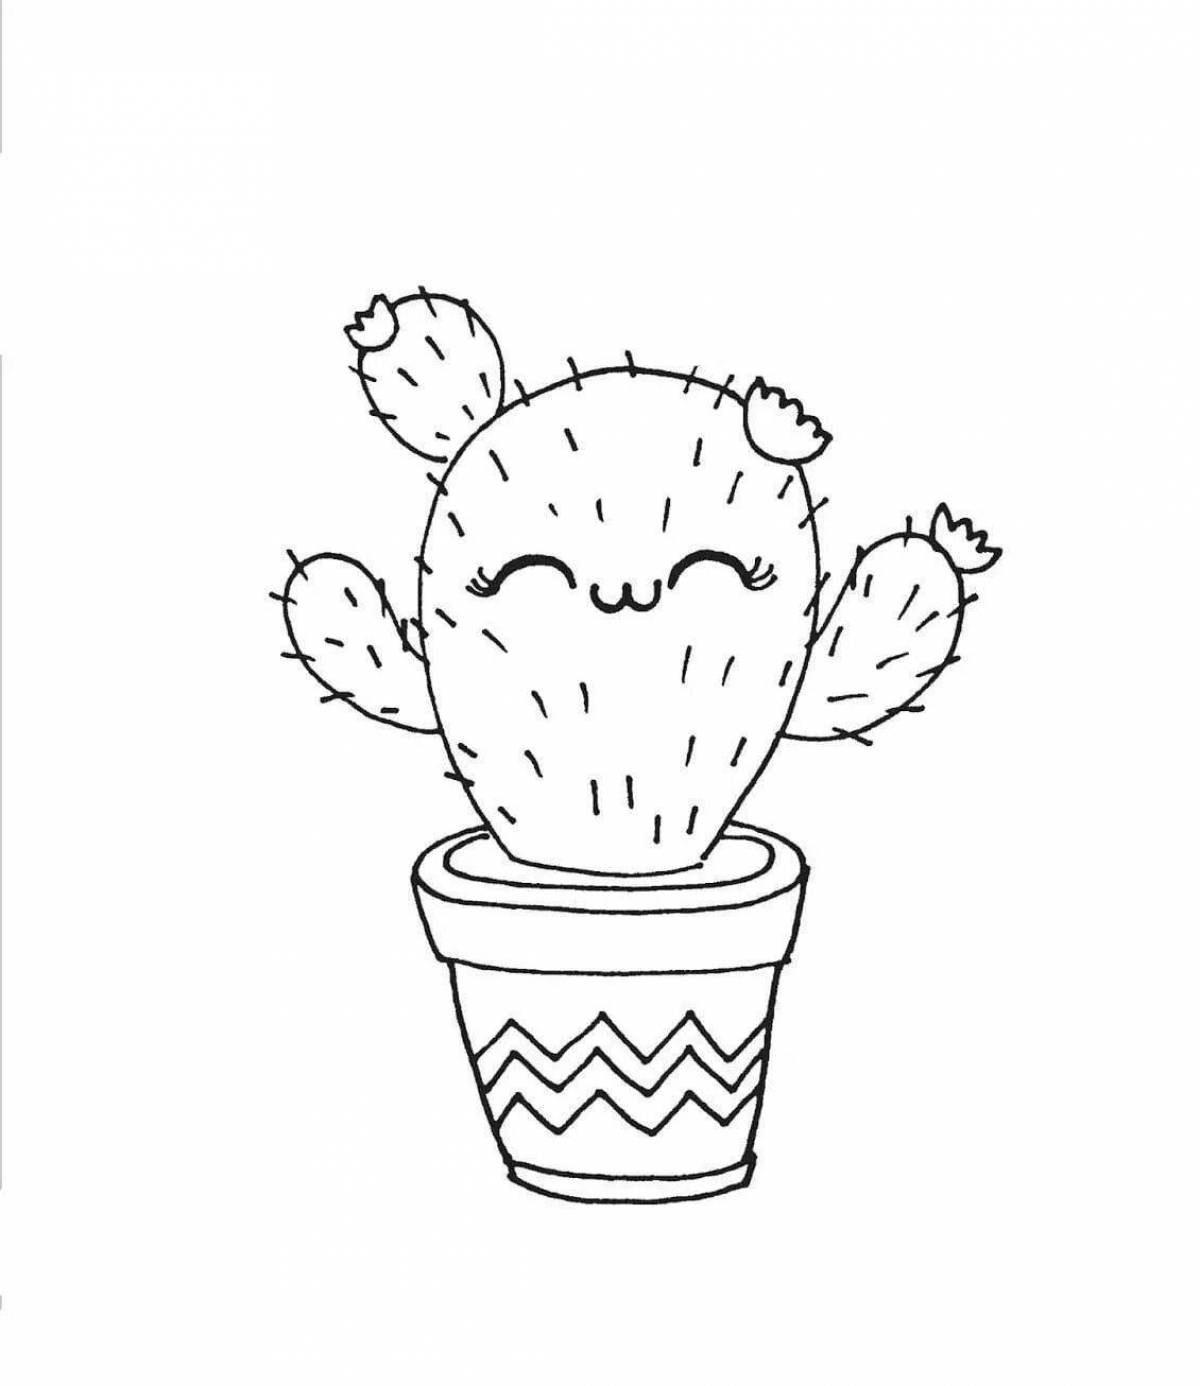 Living cactus in a pot